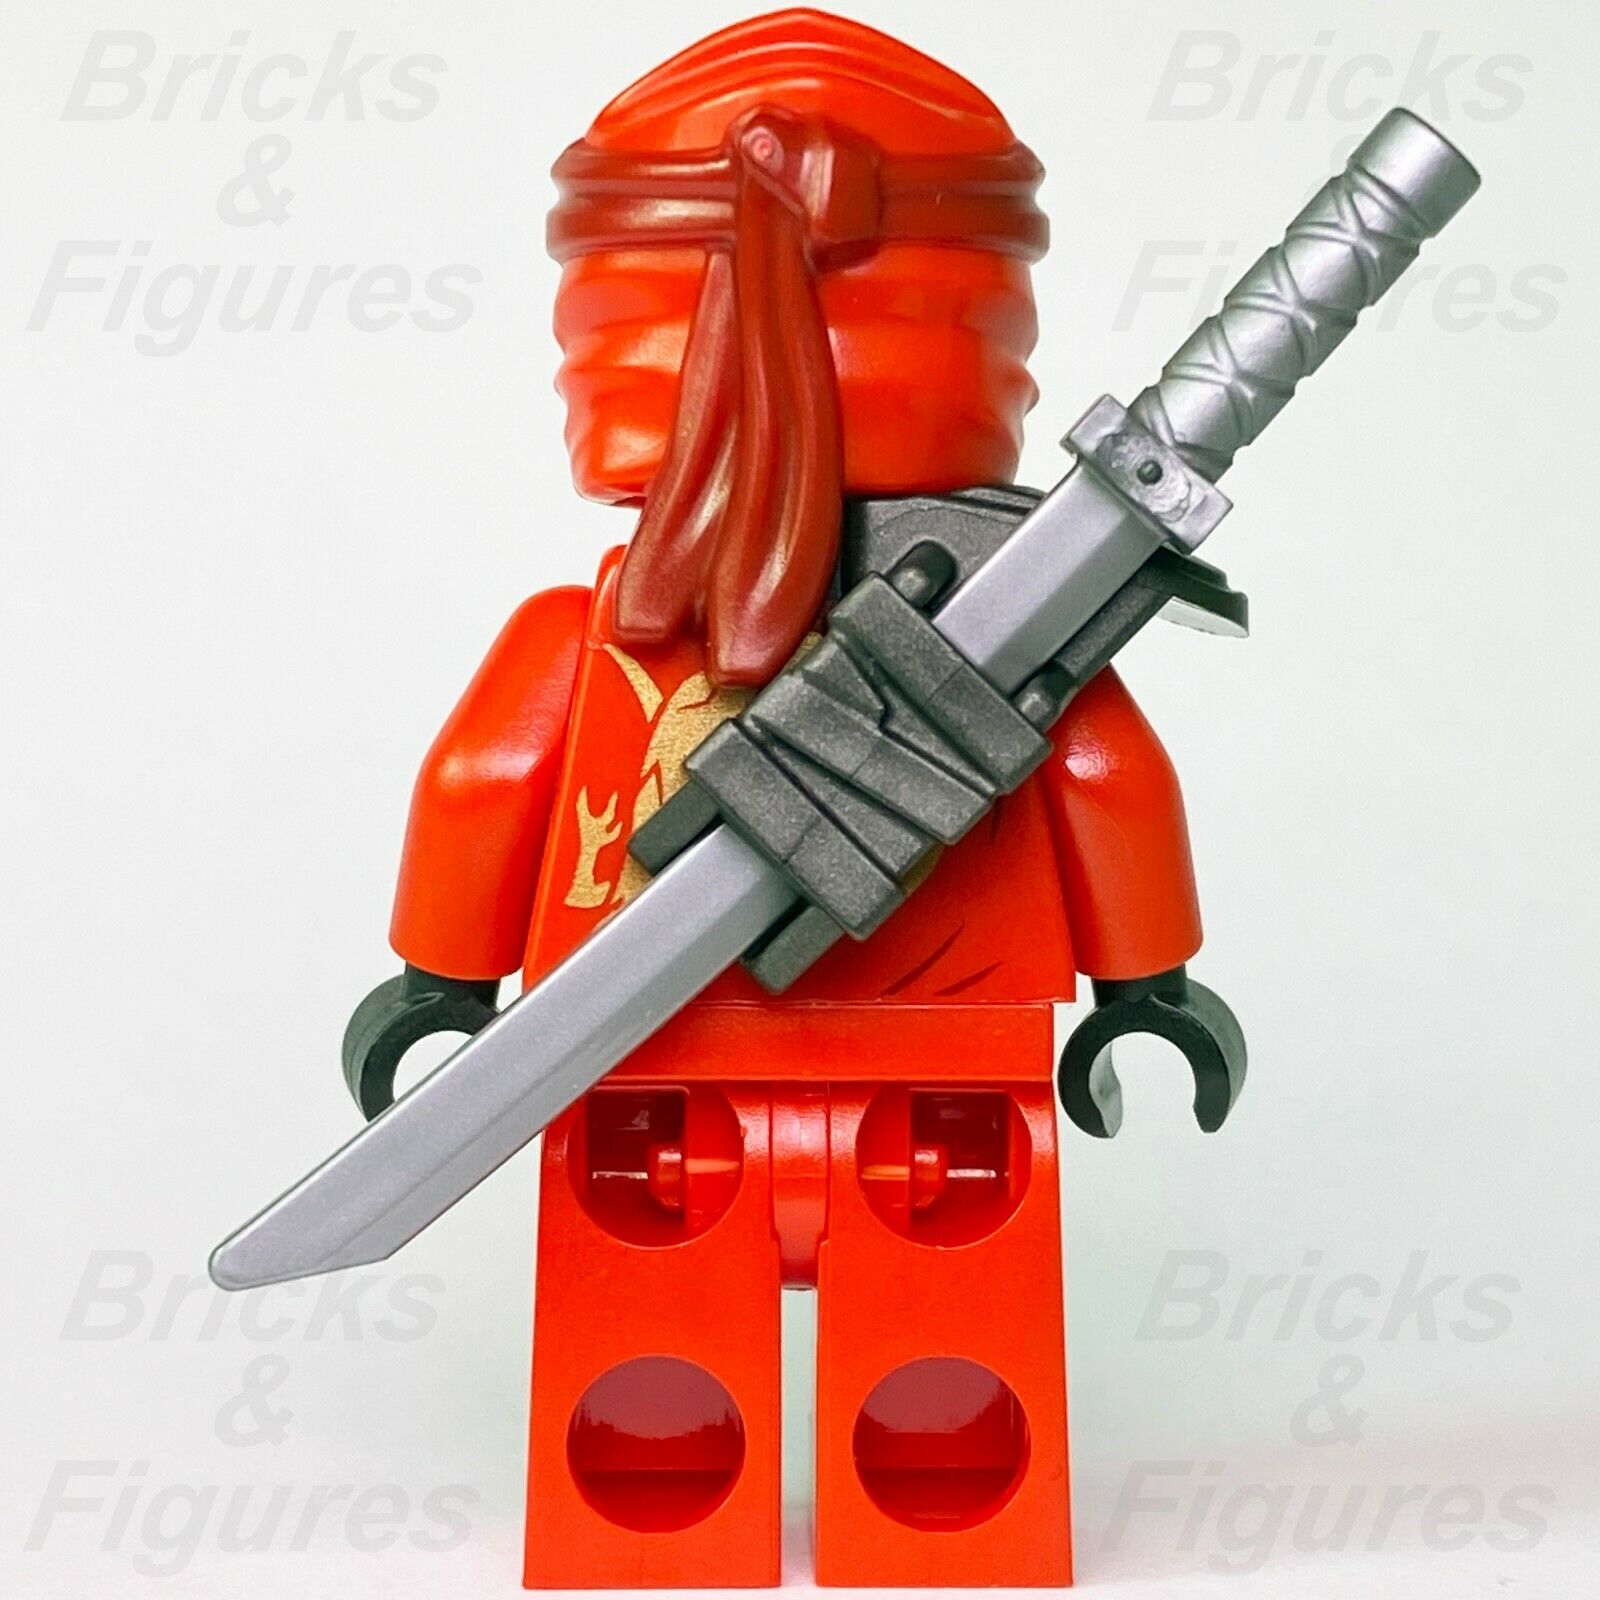 New Ninjago LEGO Kai Secrets of the Forbidden Spinjitzu Ninja Minifigure 40342 - Bricks & Figures